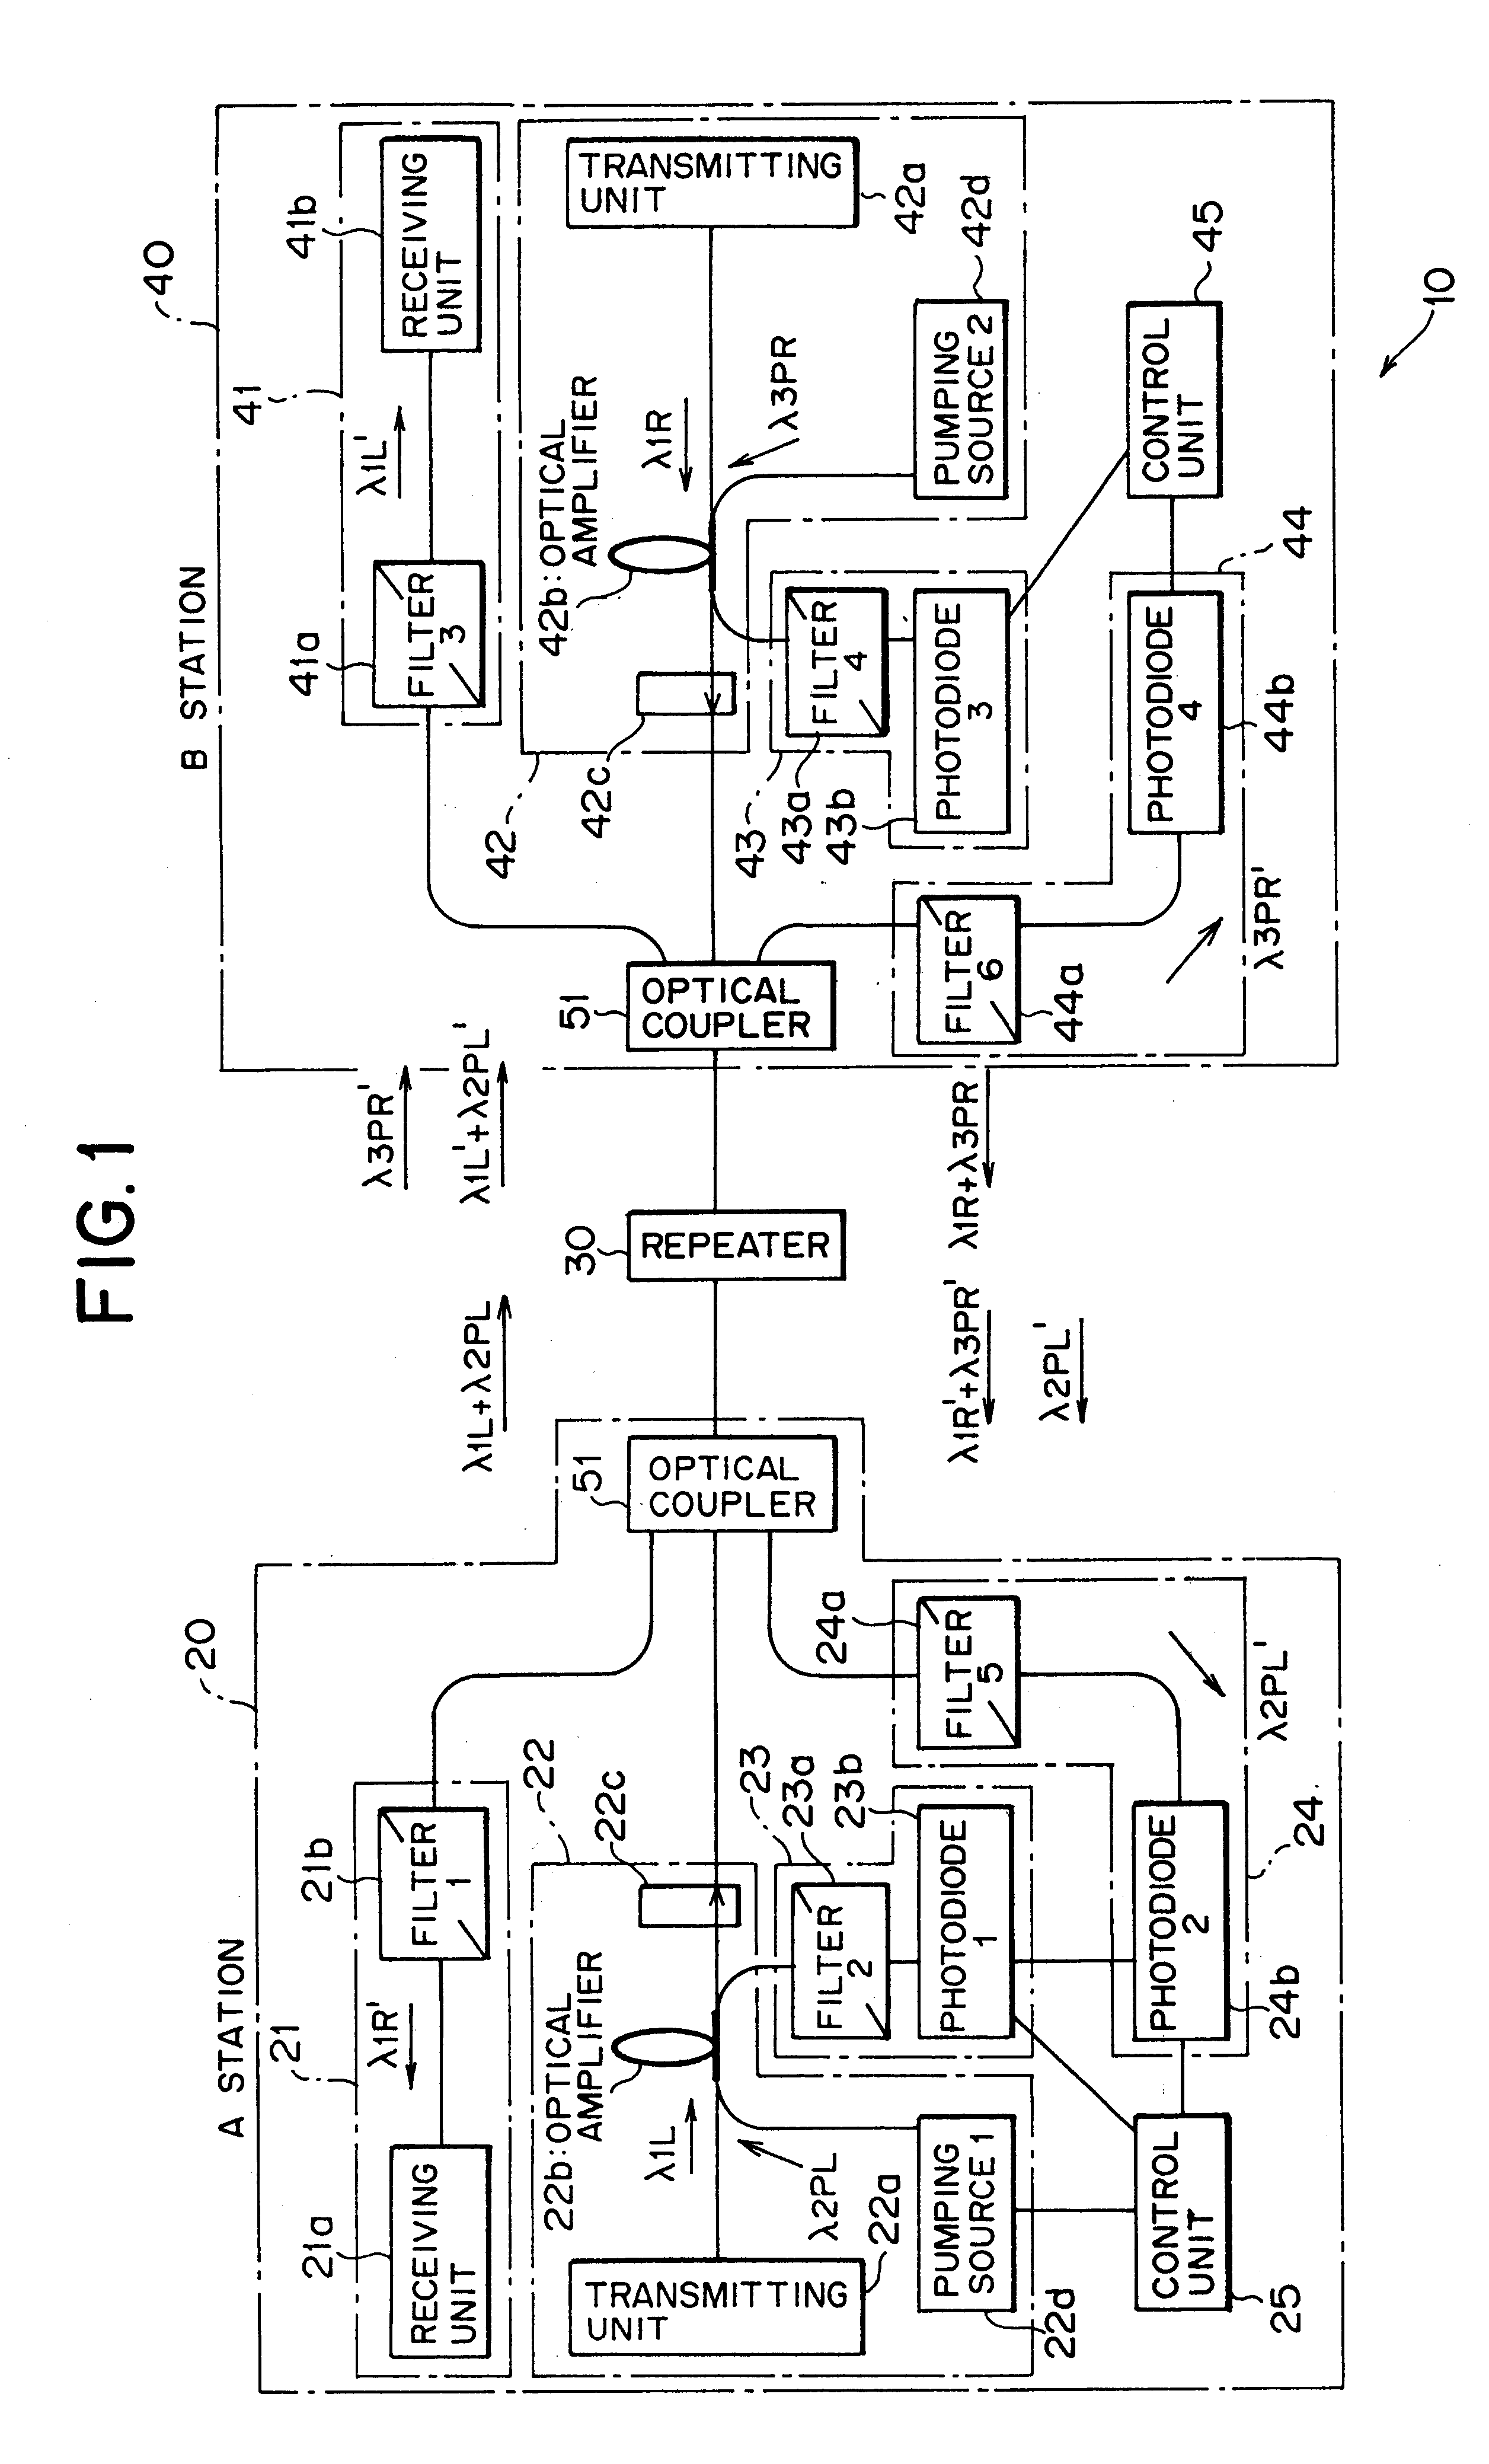 Optical transmitting apparatus and optical repeating apparatus